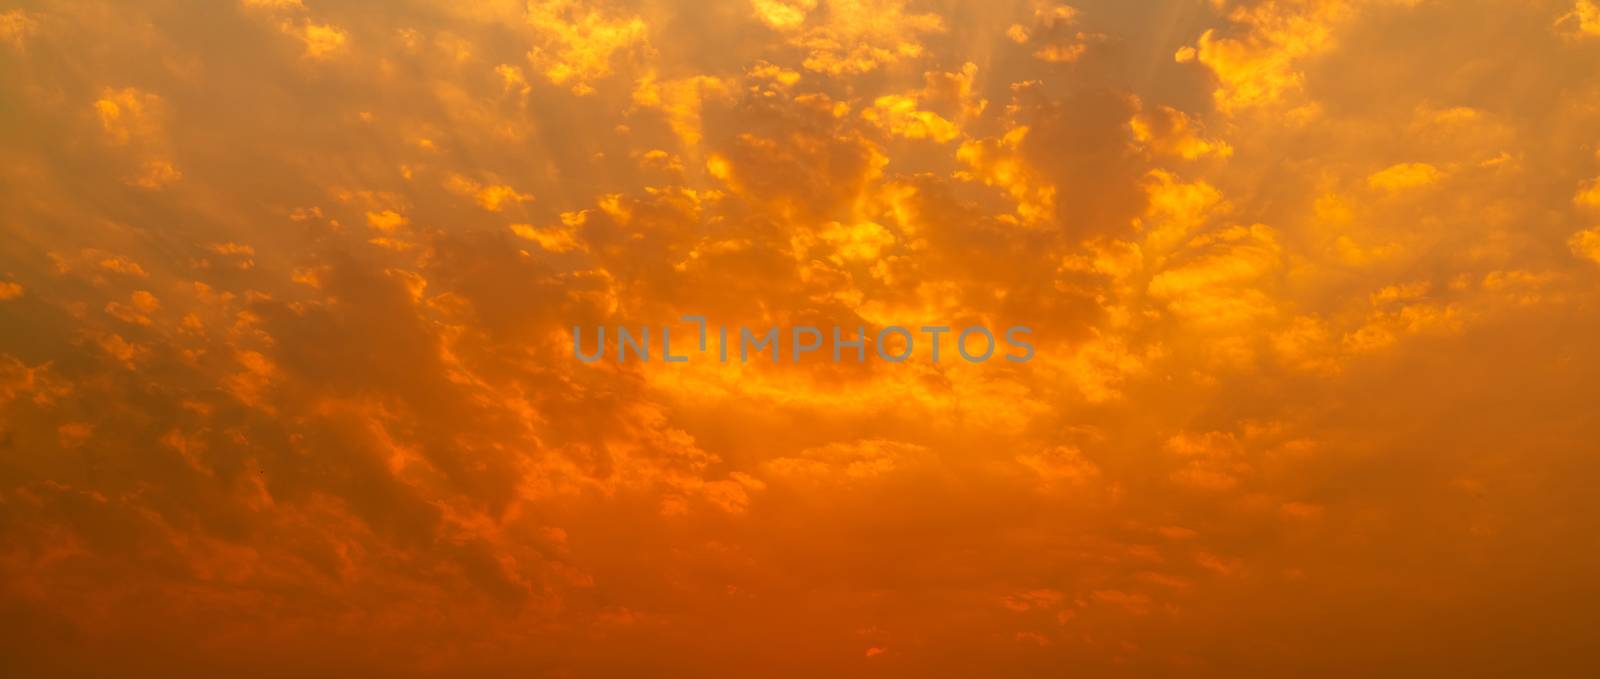 Beautiful sunset sky. Golden sunset sky with beautiful pattern o by Fahroni